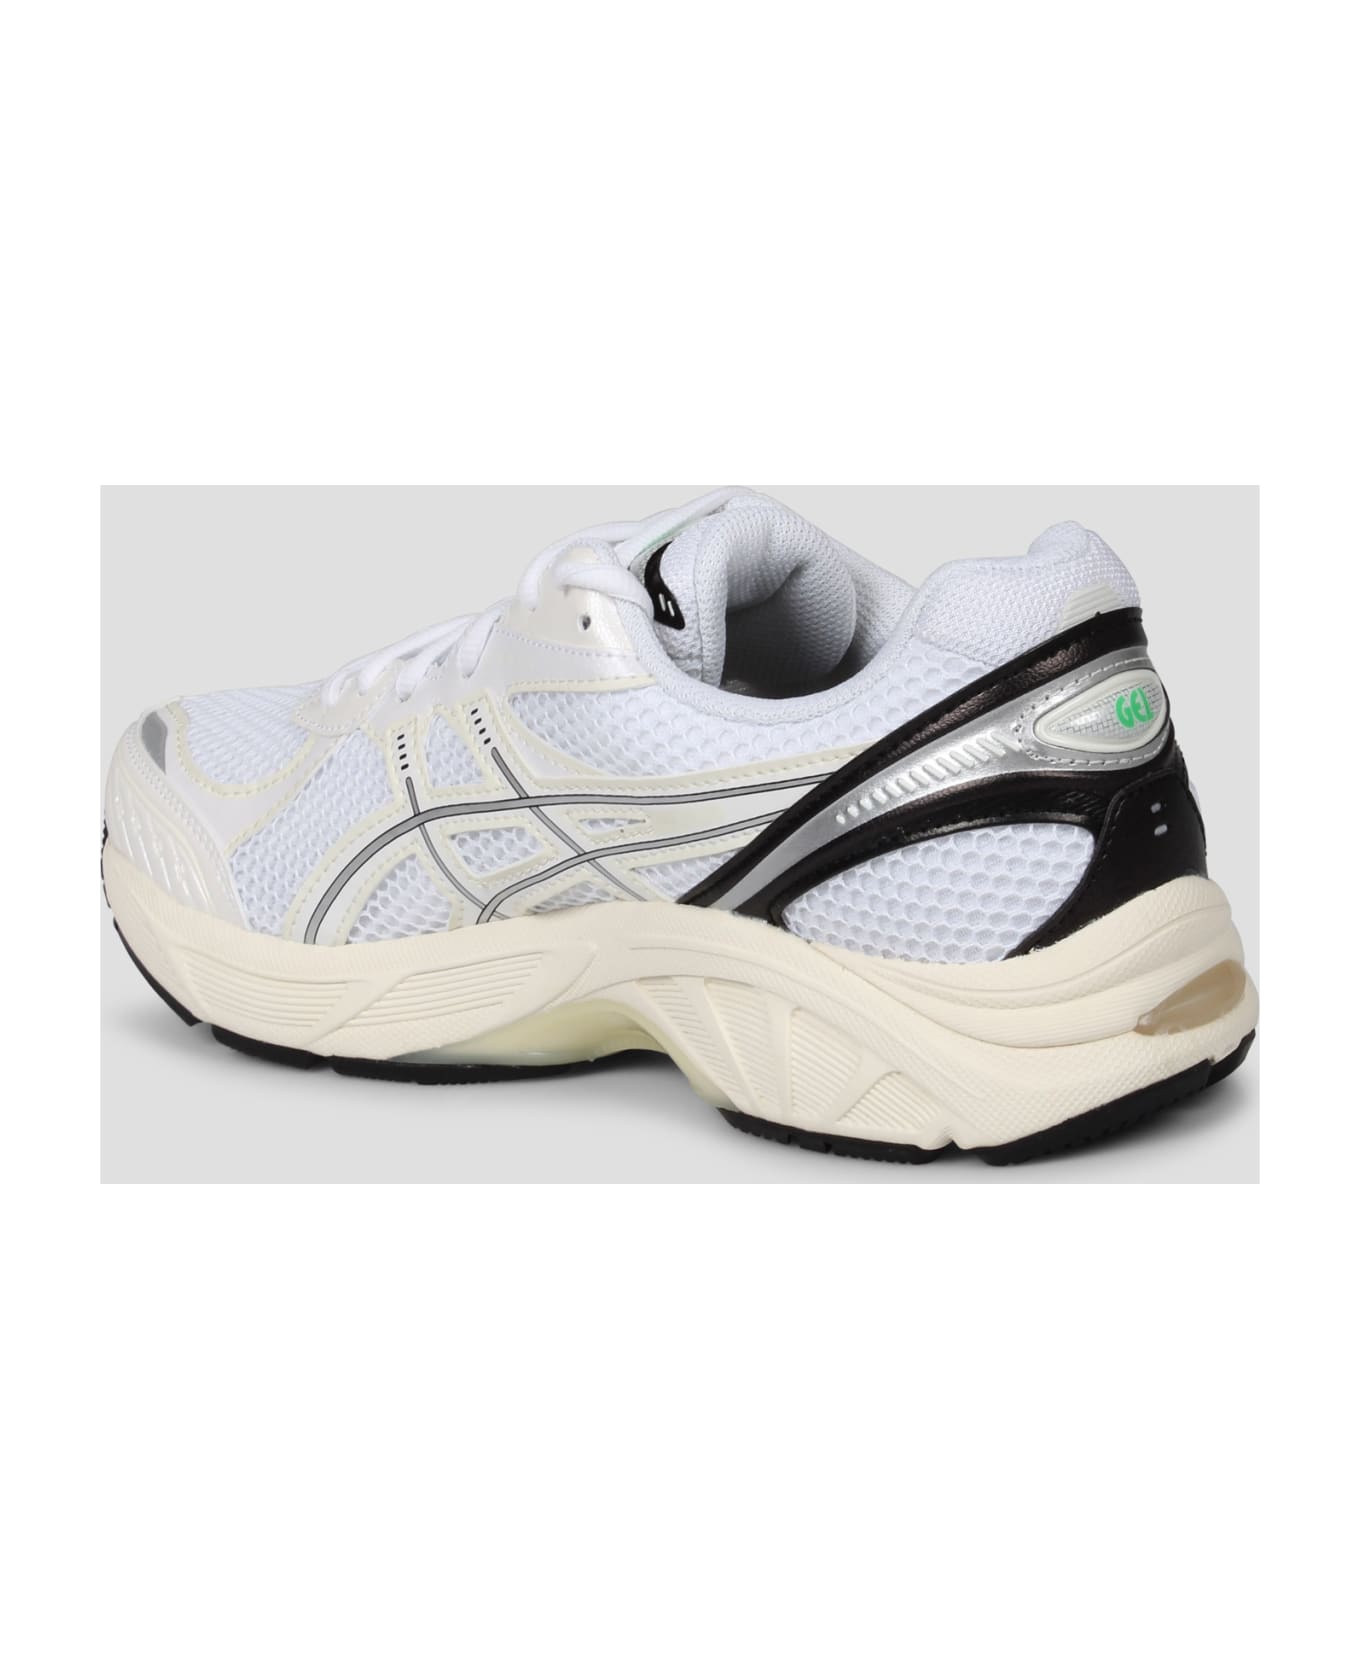 Asics Gt 2160 Sneakers - White